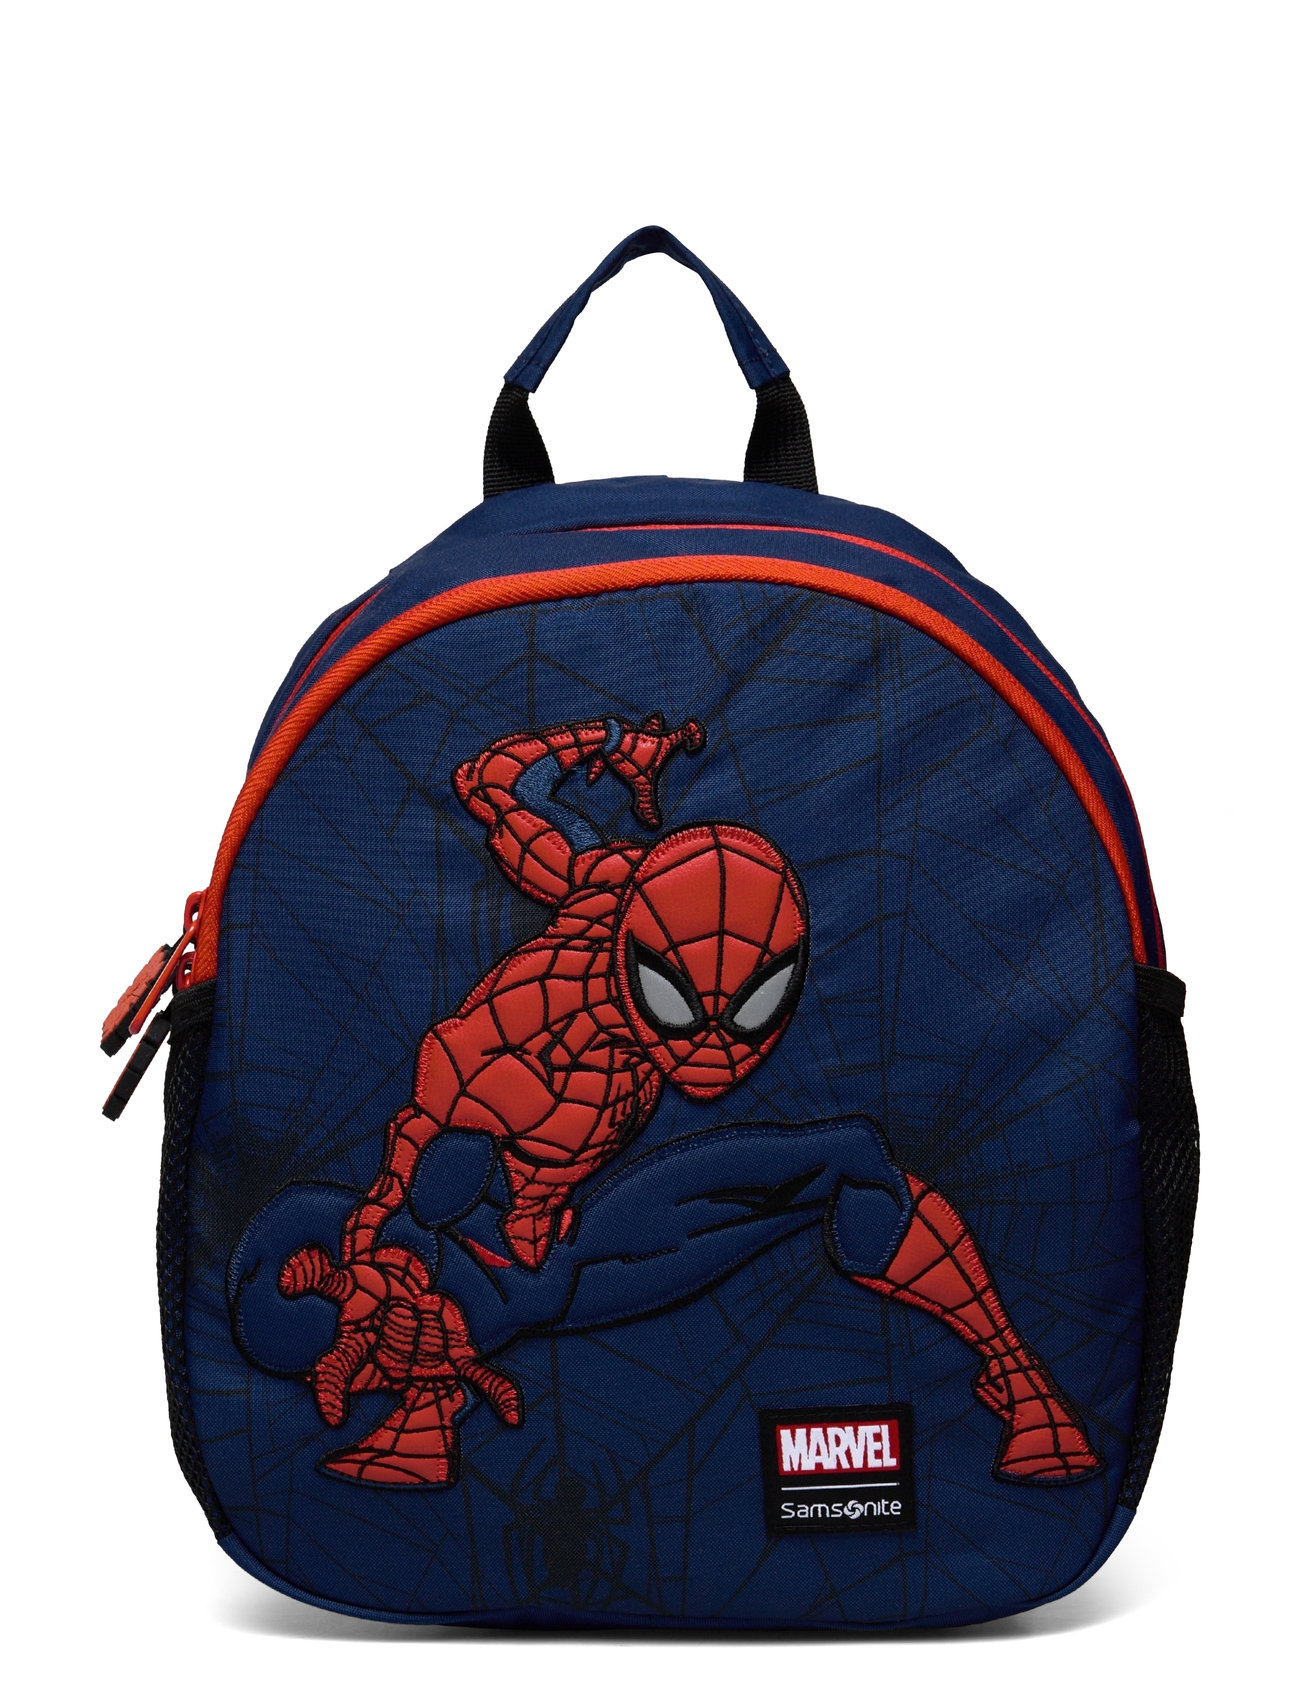 Disney Ultimate Disney Marvel Spiderman Web Backpack S Ryggsäck Väska Navy Samsonite